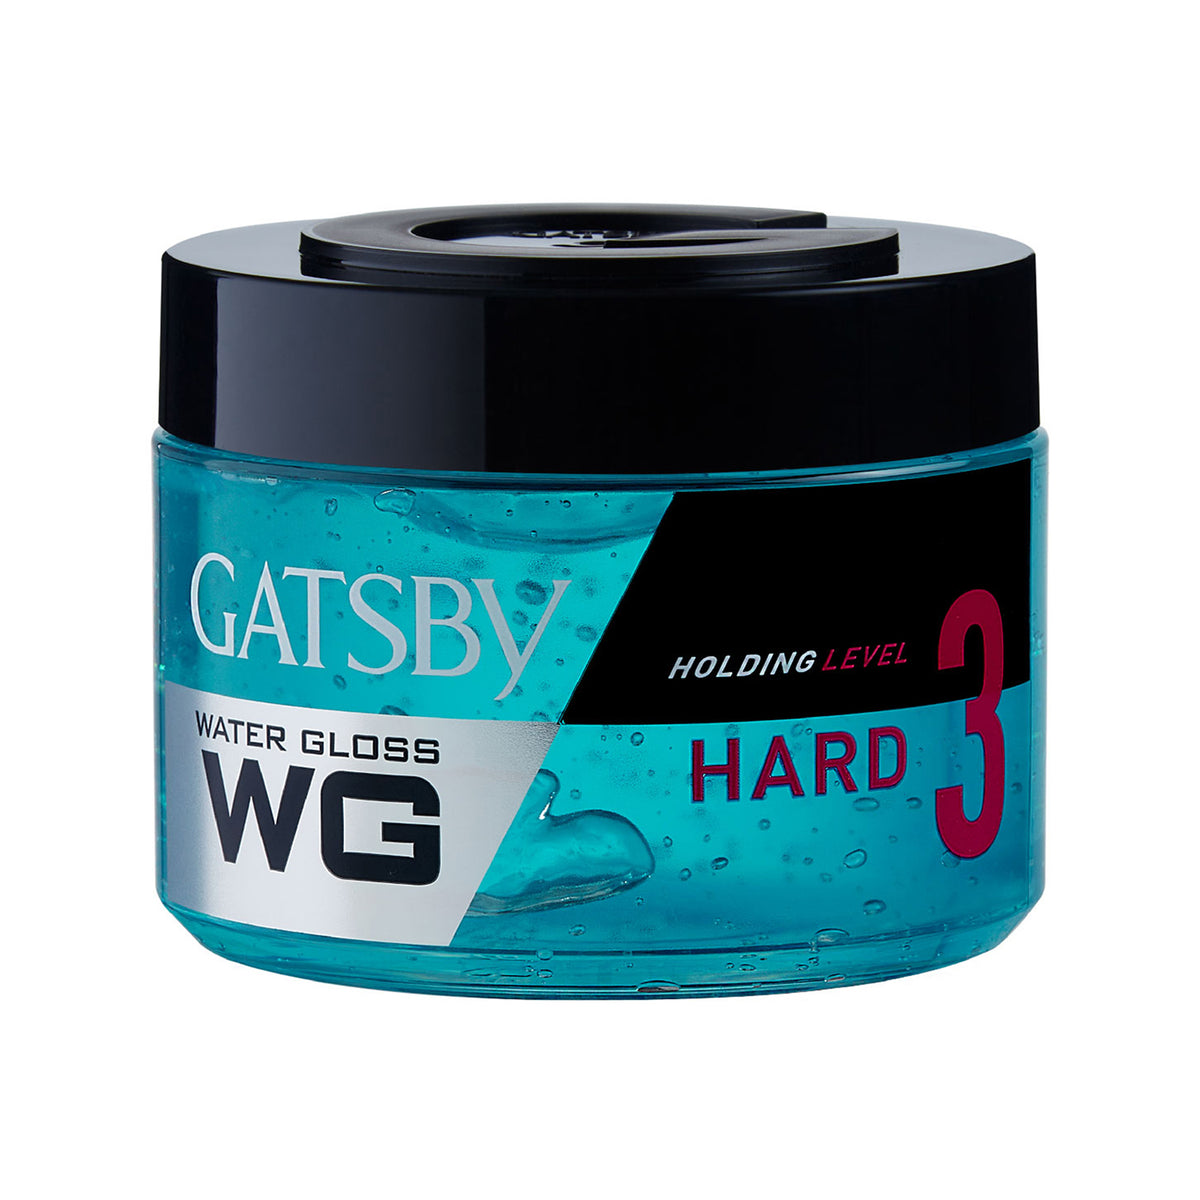 Gatsby Water Gloss - Hard, 300g Gardenia Cosmotrade LLP